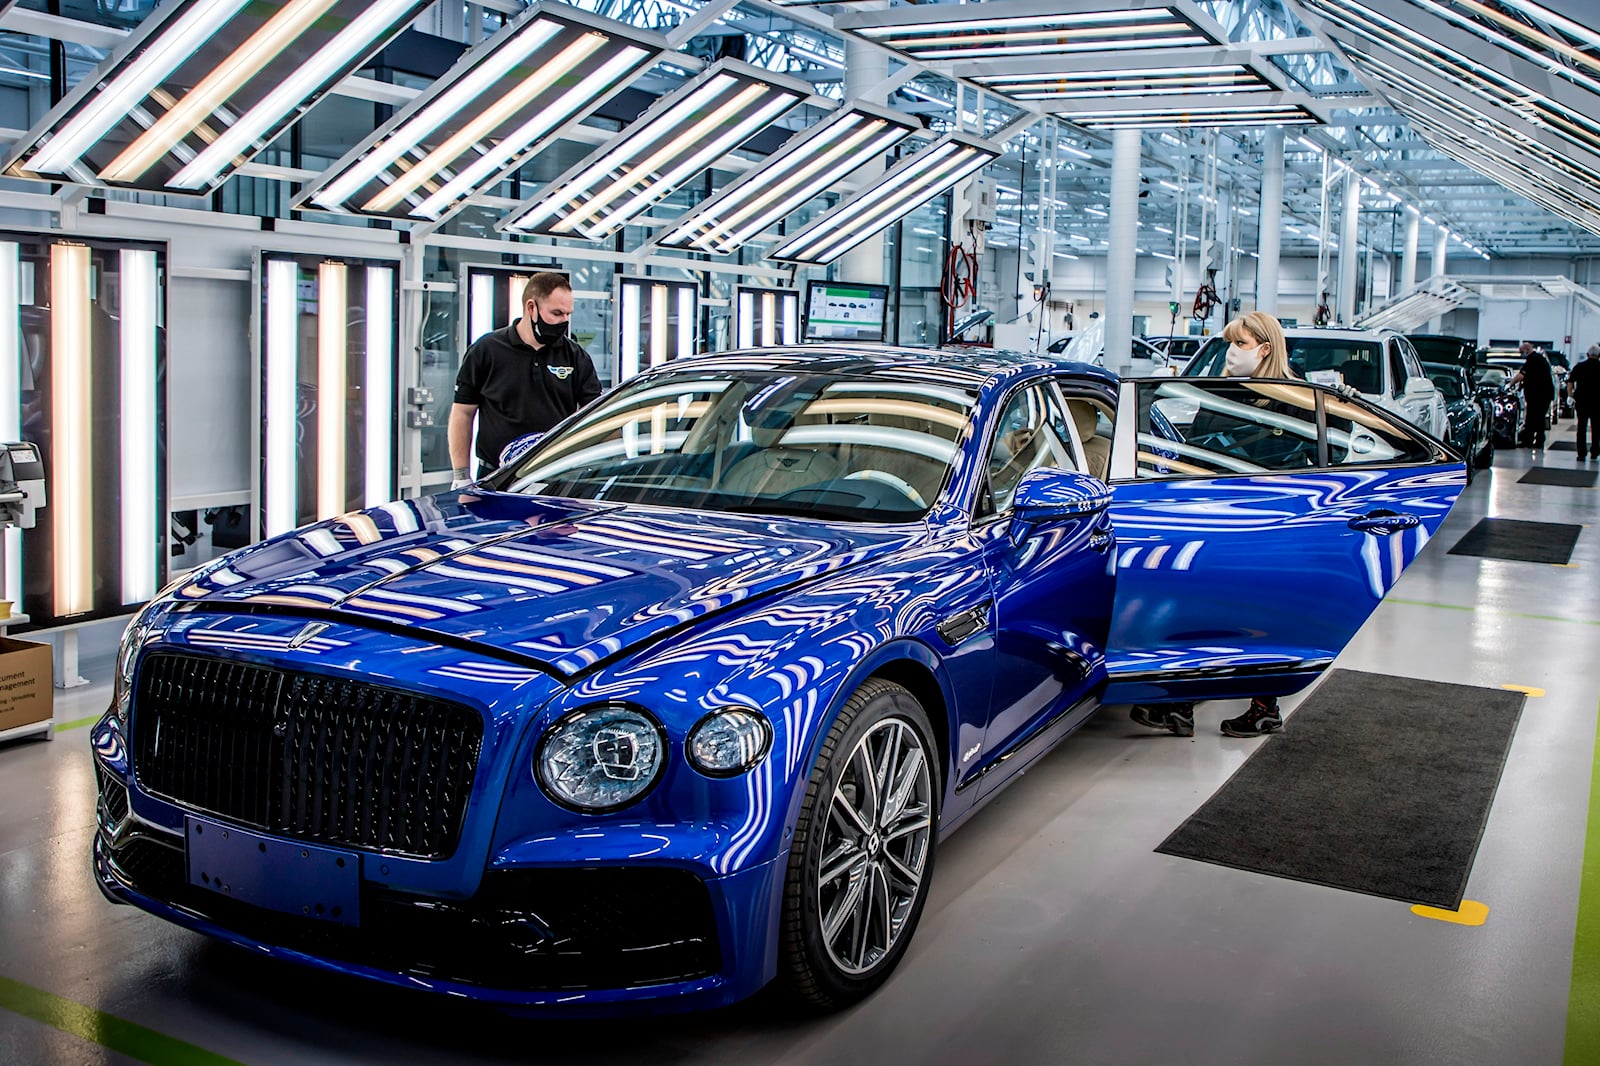 Bentleys Profits Are Up Despite Selling Fewer Cars